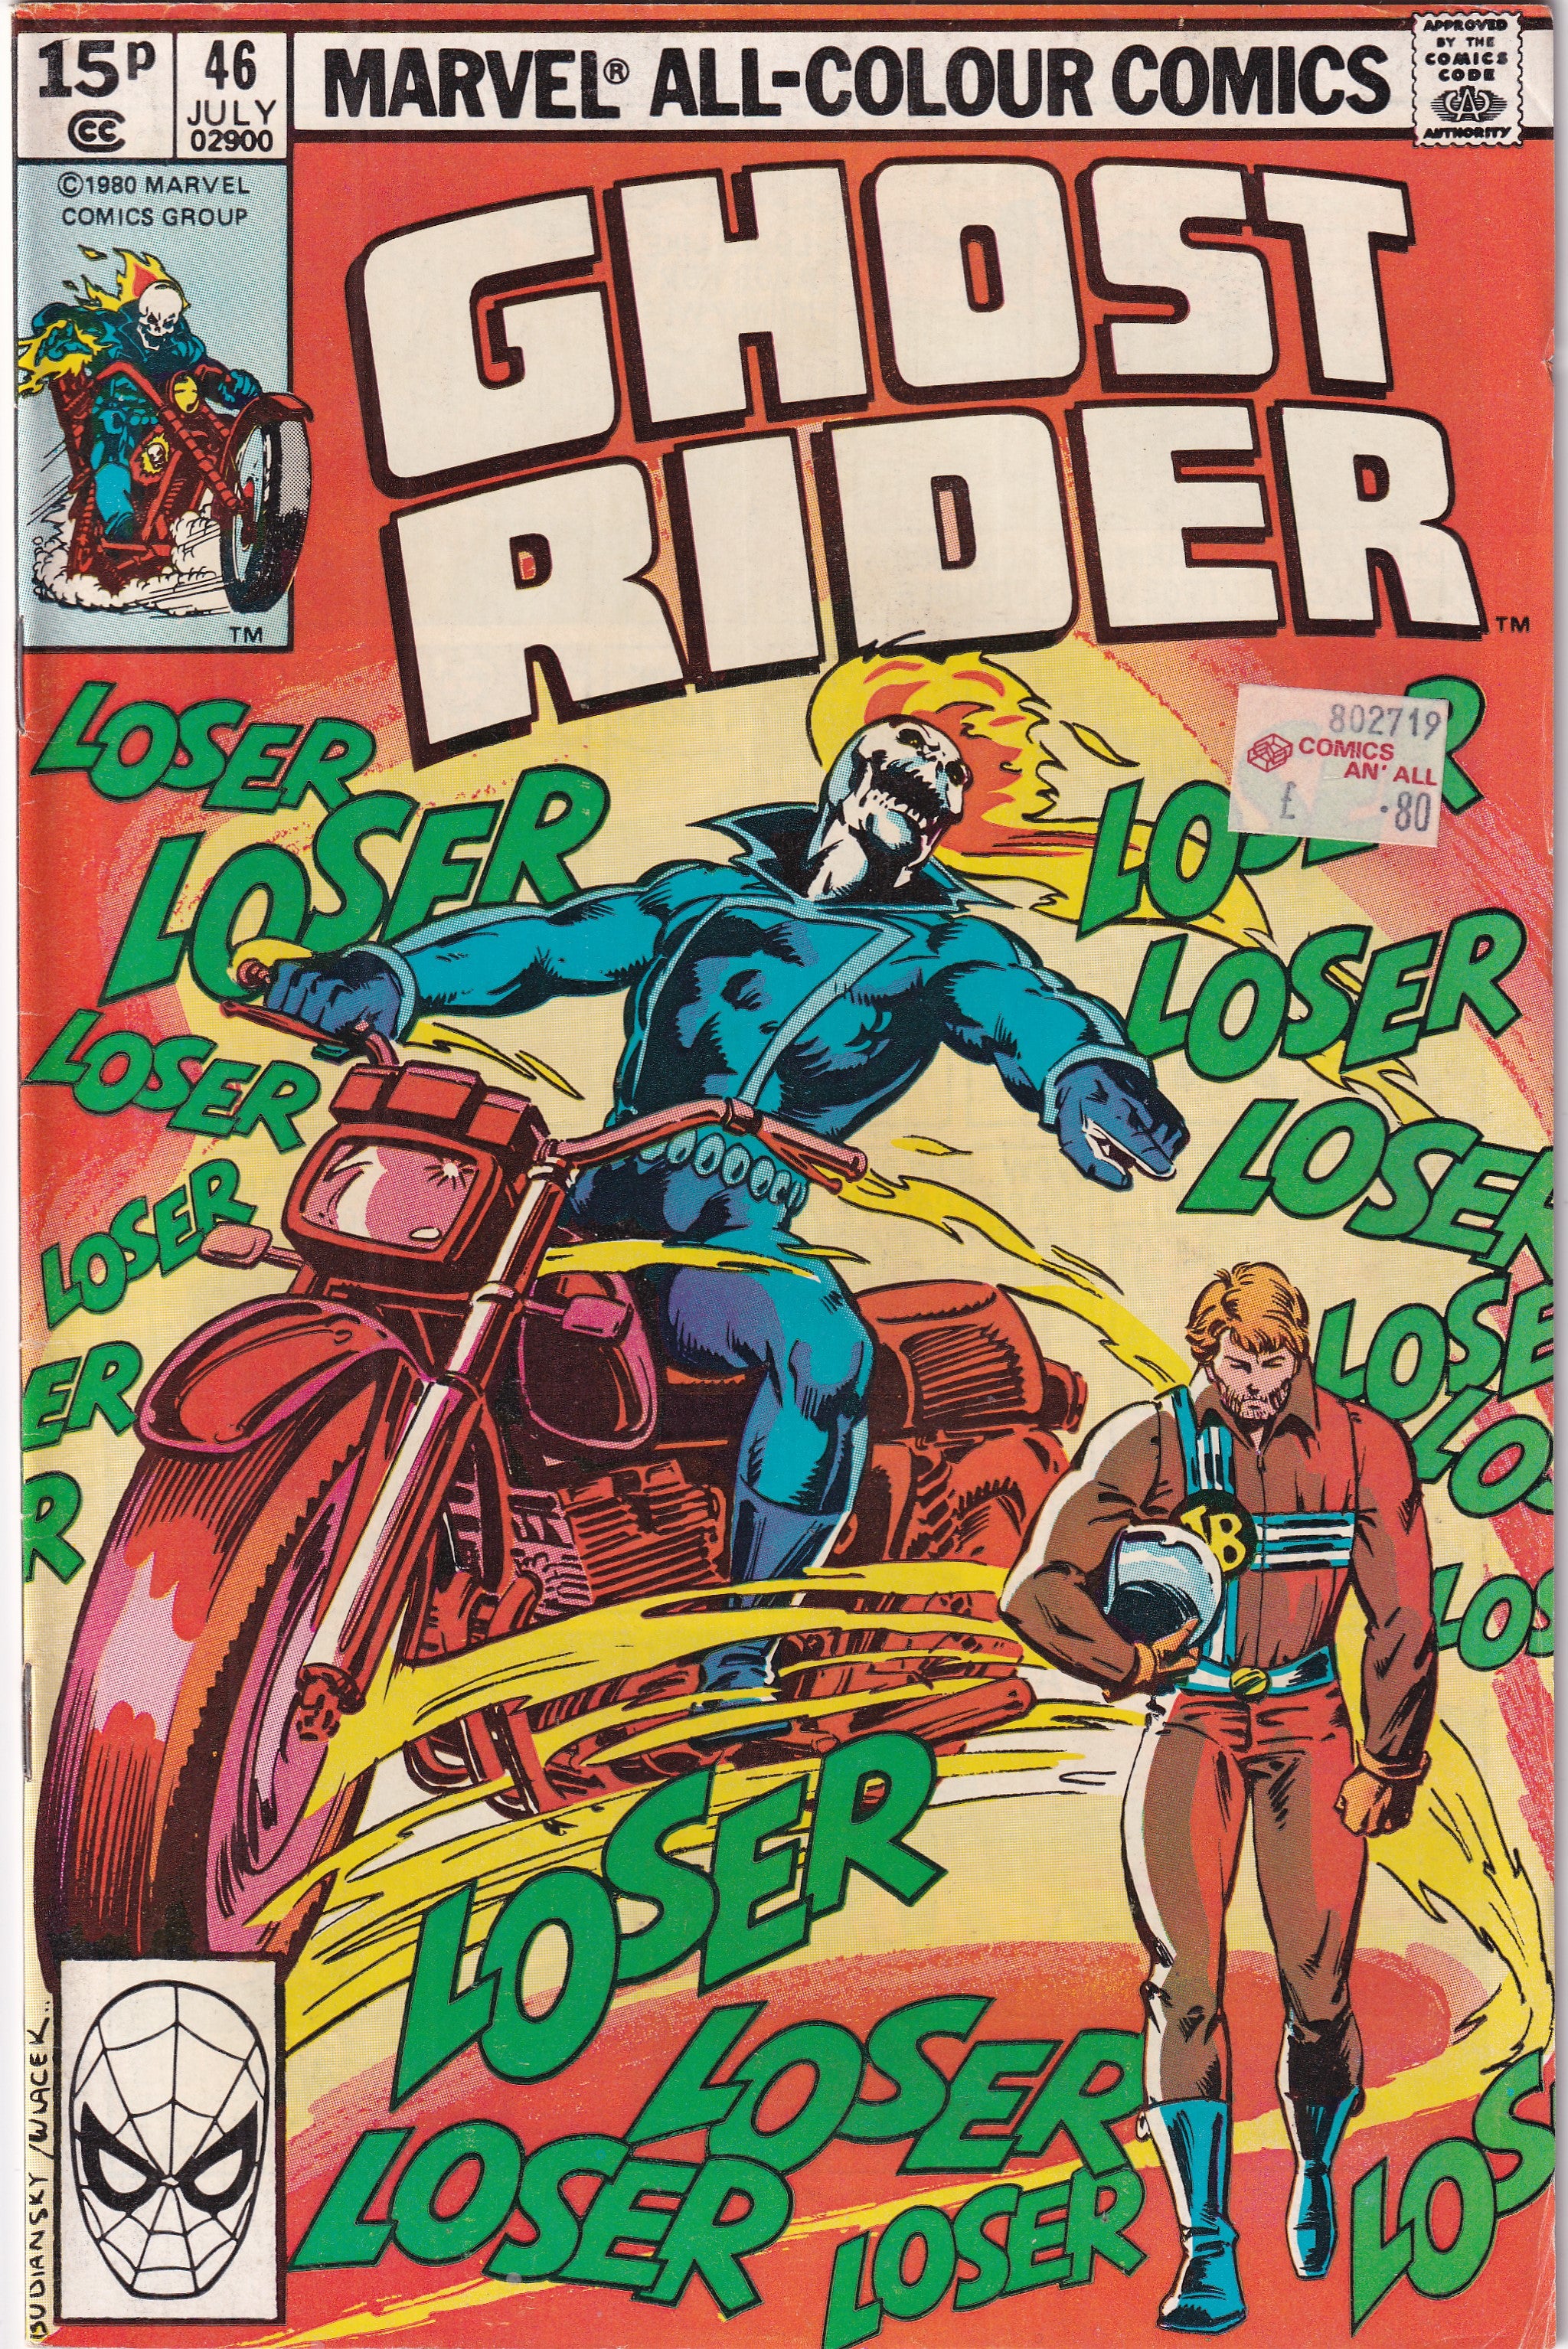 GHOST RIDER #46 - Slab City Comics 